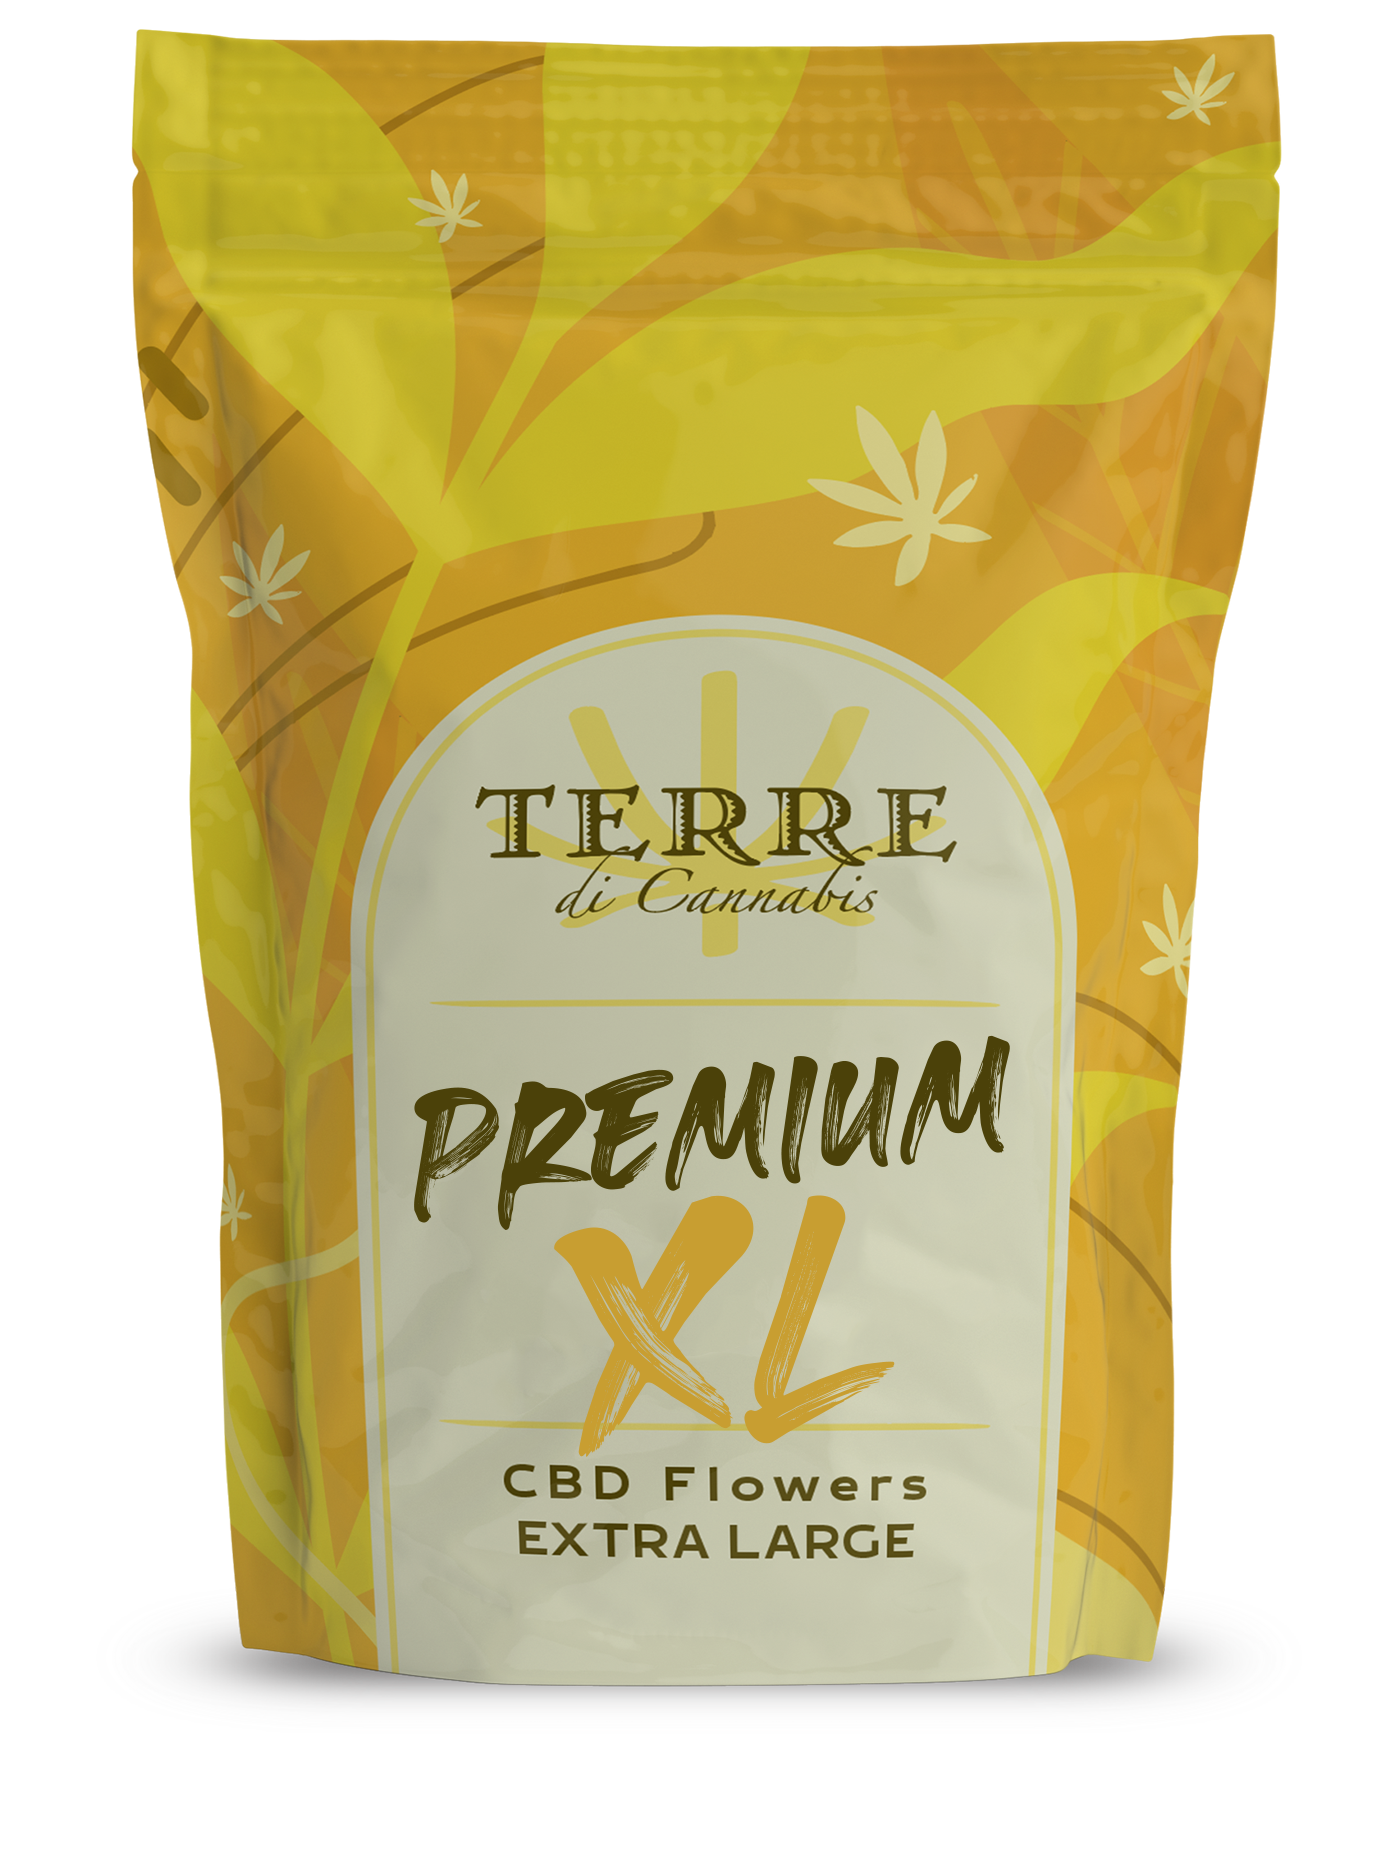 Flores de CBD y CBG Premium XL